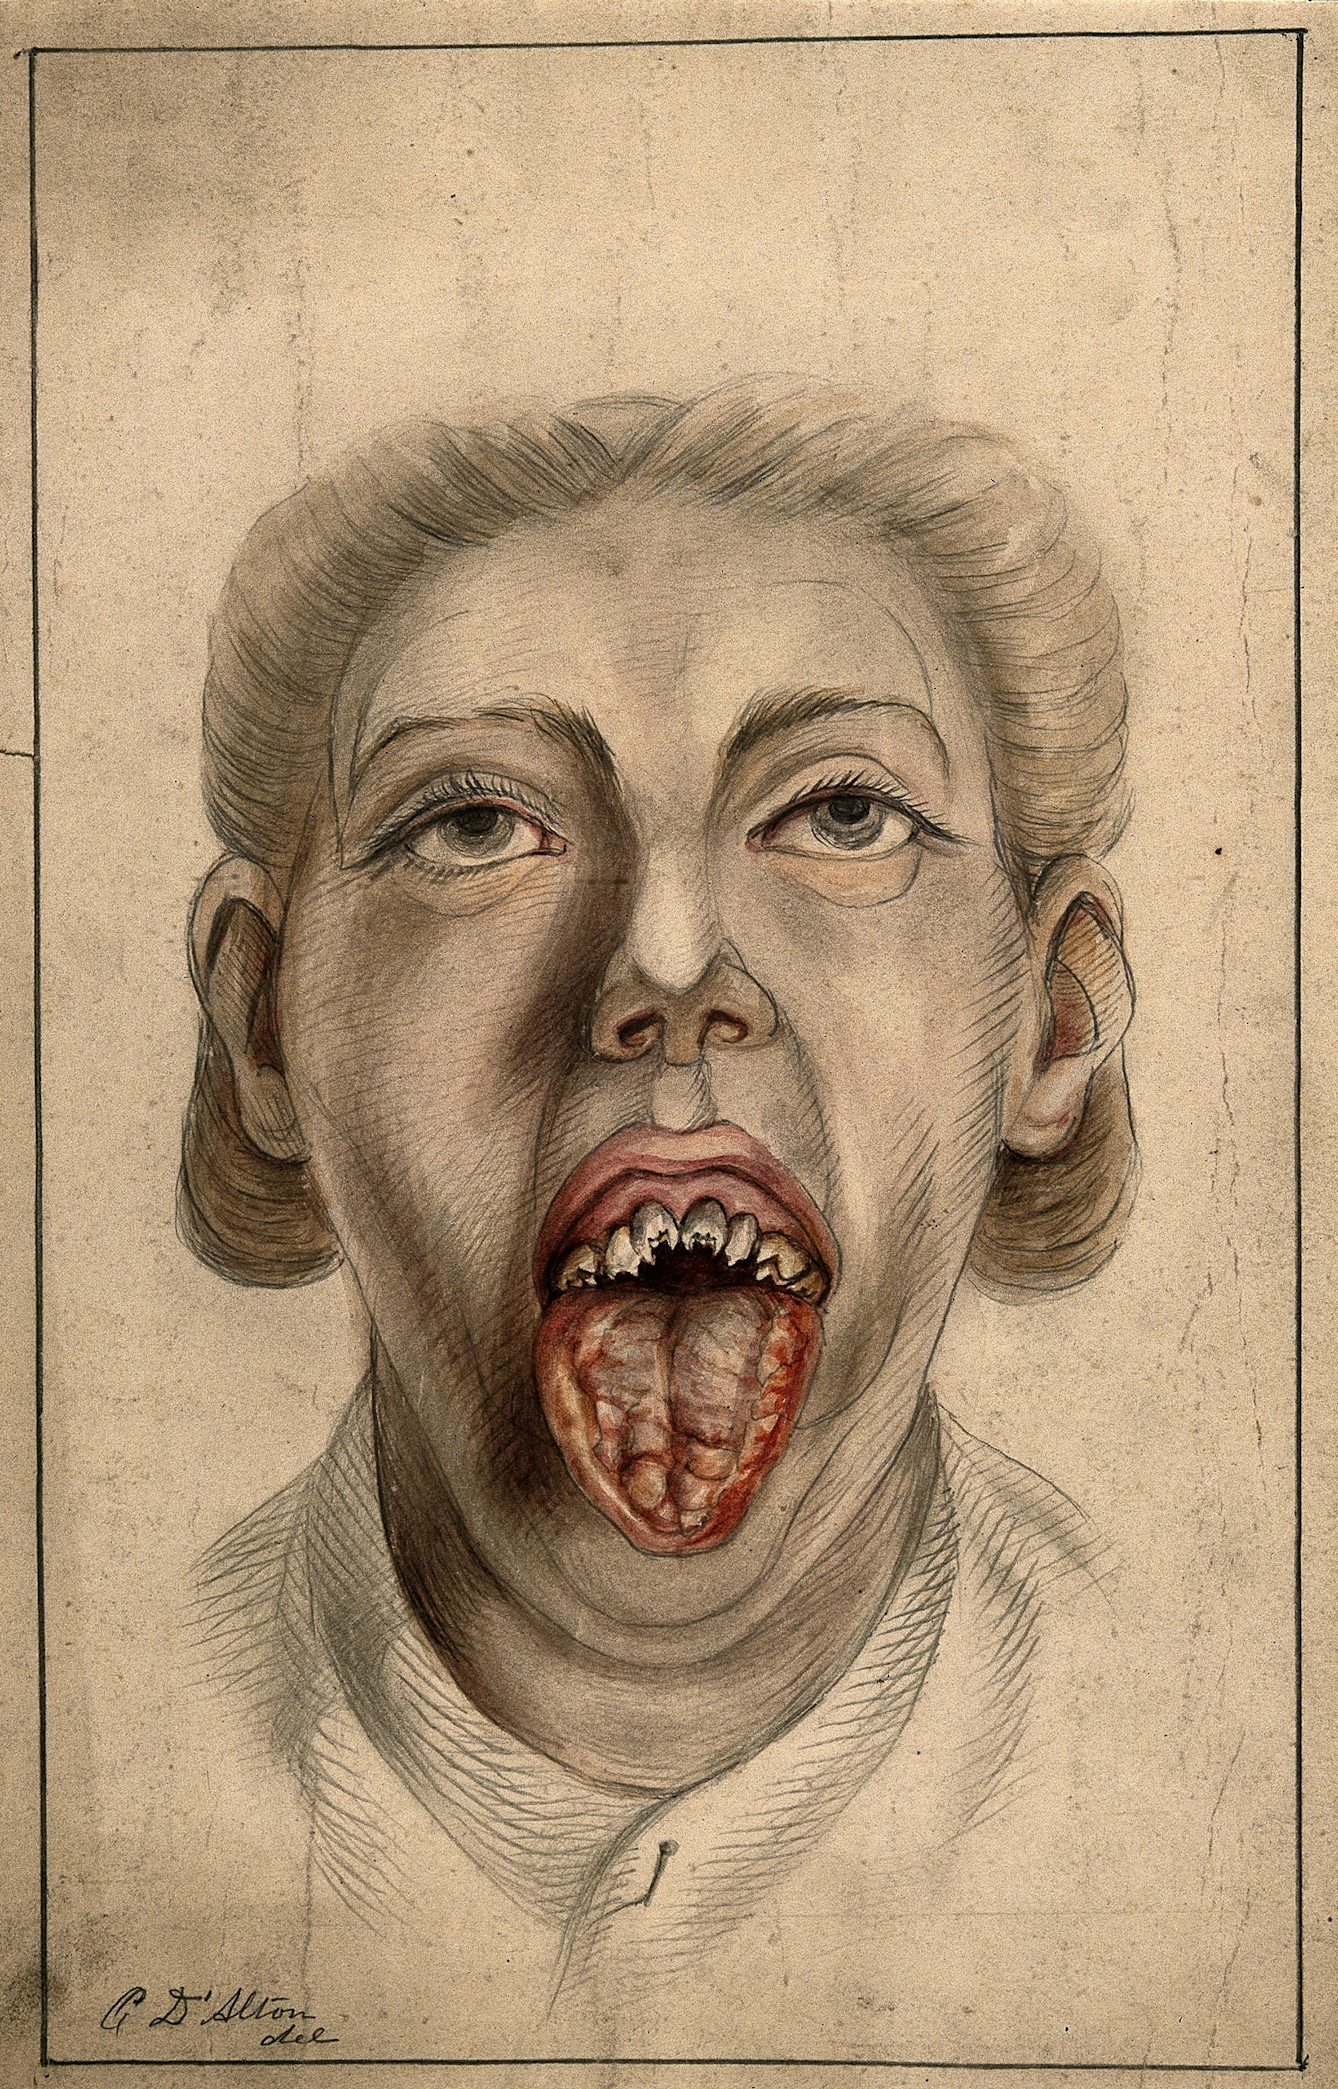 Woman with diseased tongue and broken teeth, 1874.